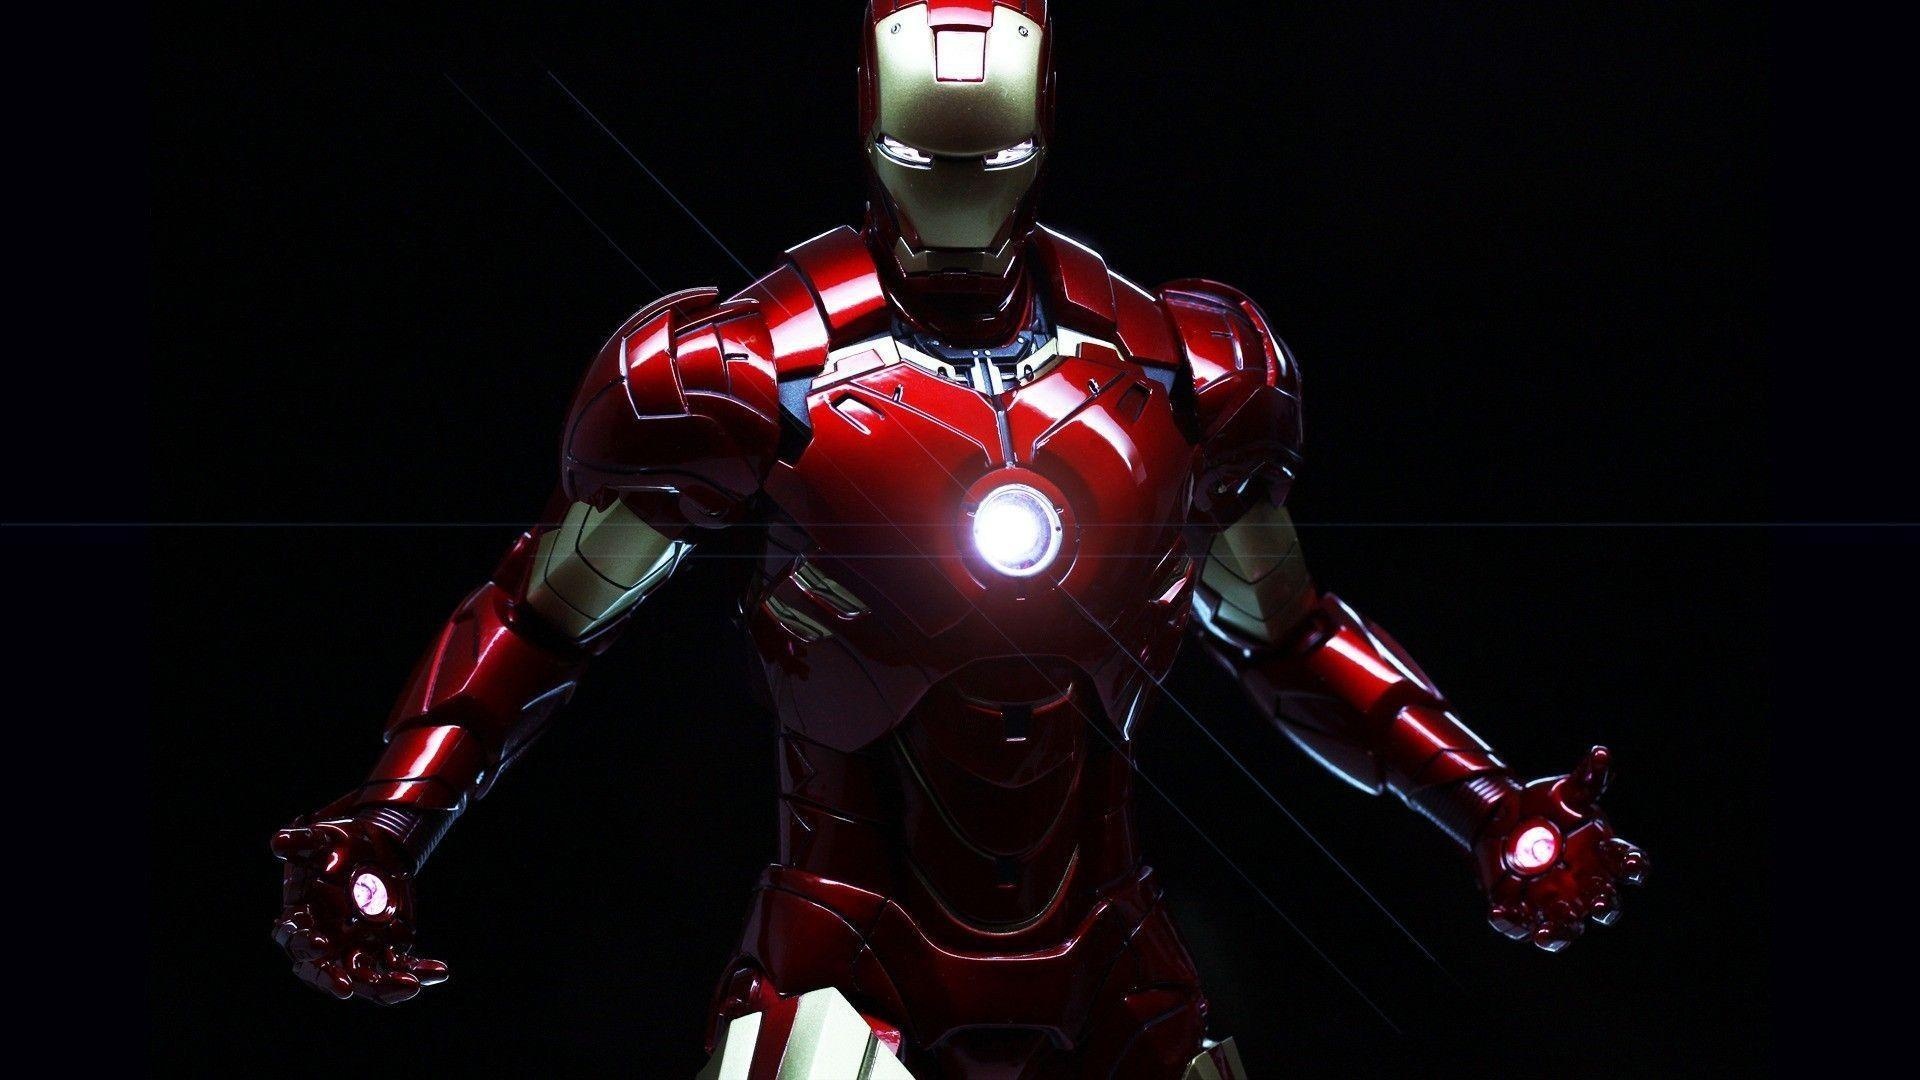 Iron Man Suit, Advanced technology, Powerful superhero, Epic battles, 1920x1080 Full HD Desktop